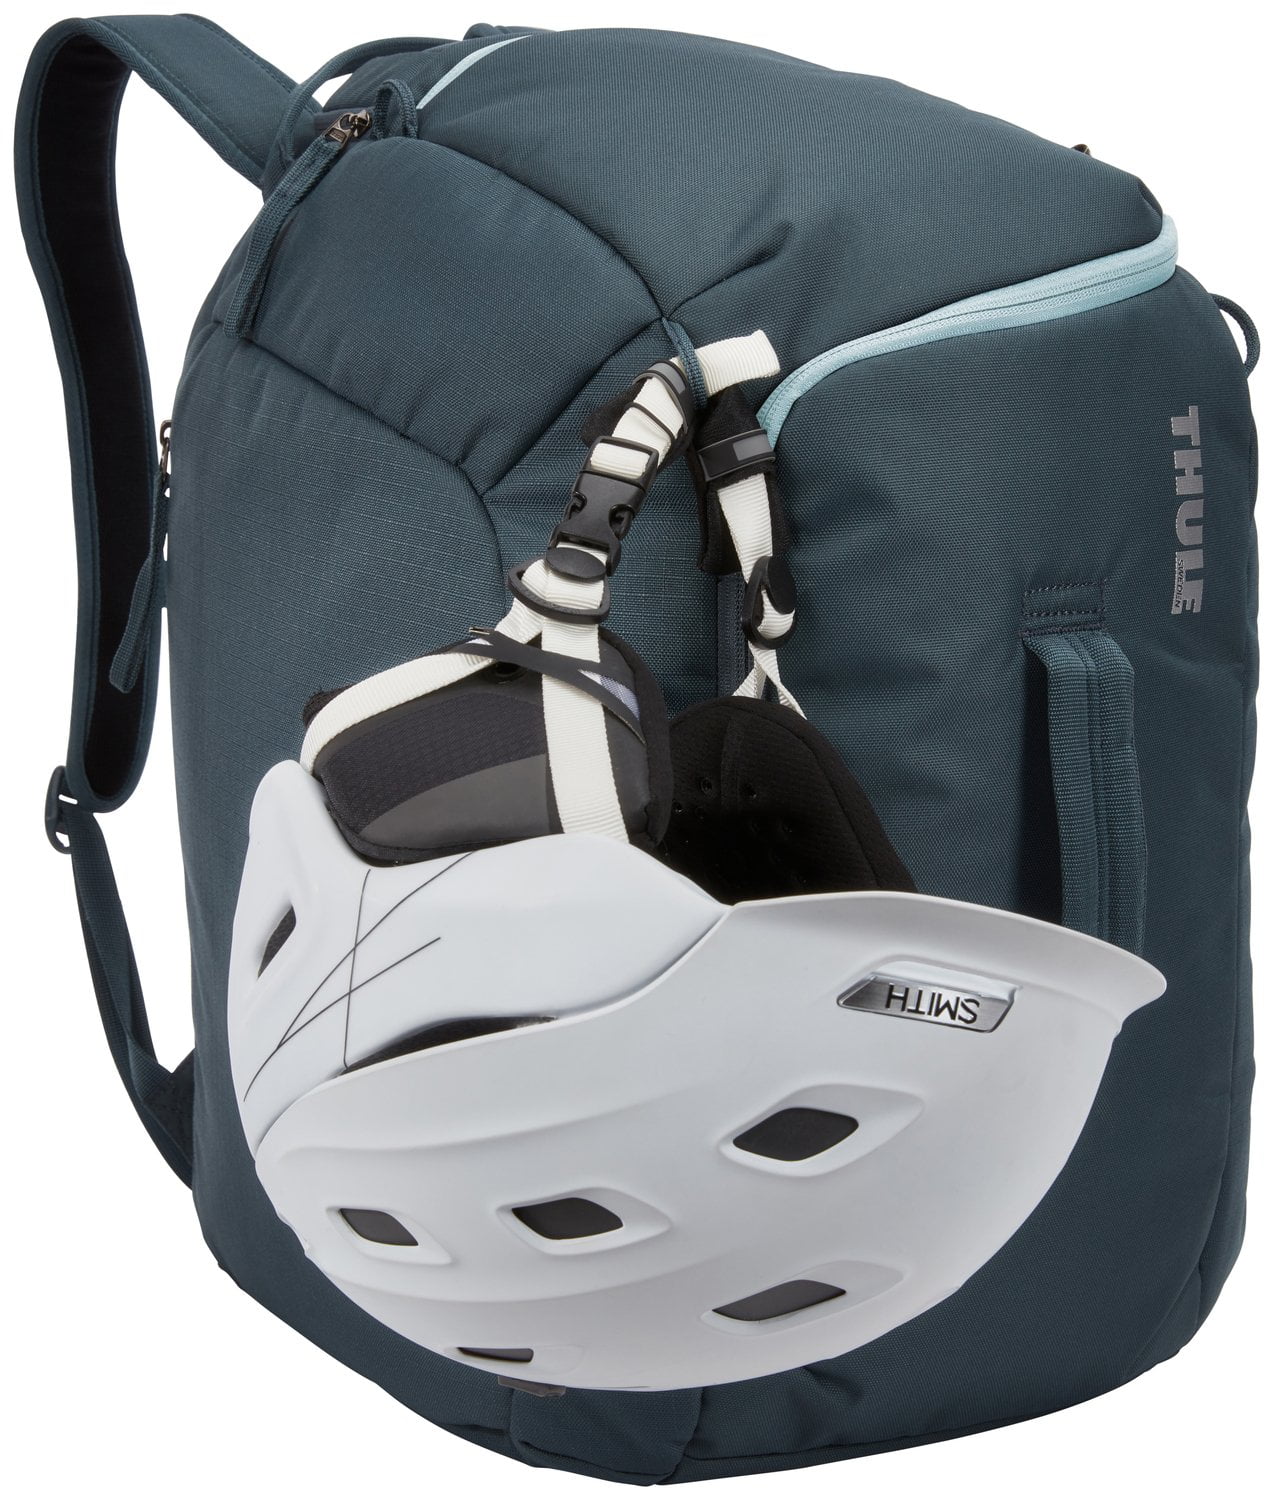 Thule RoundTrip Ski Boot Backpack 45L - Dark Slate